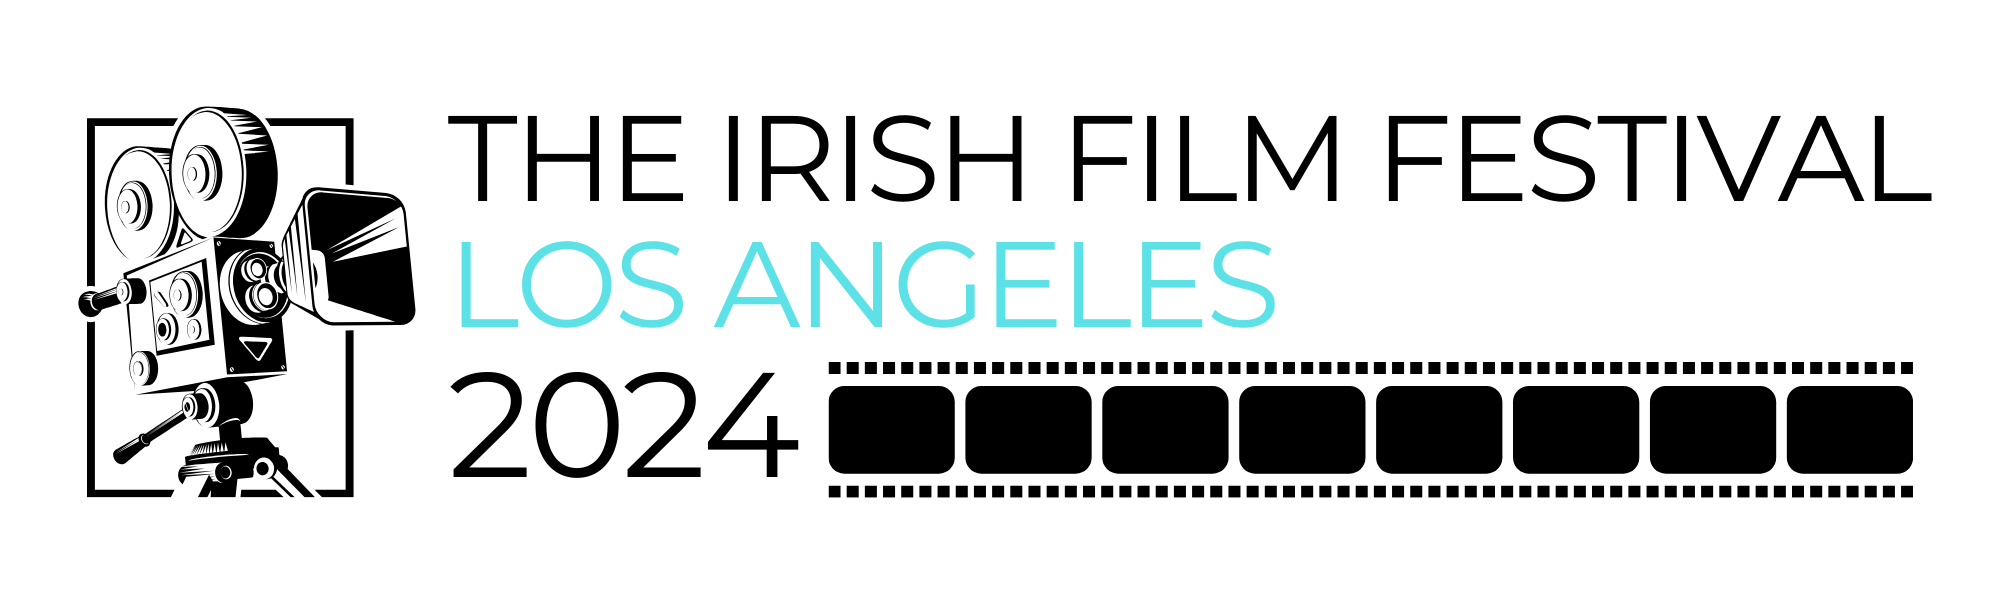 IRISH FILM FESTIVAL LOS ANGELES 2024-LOGO-1